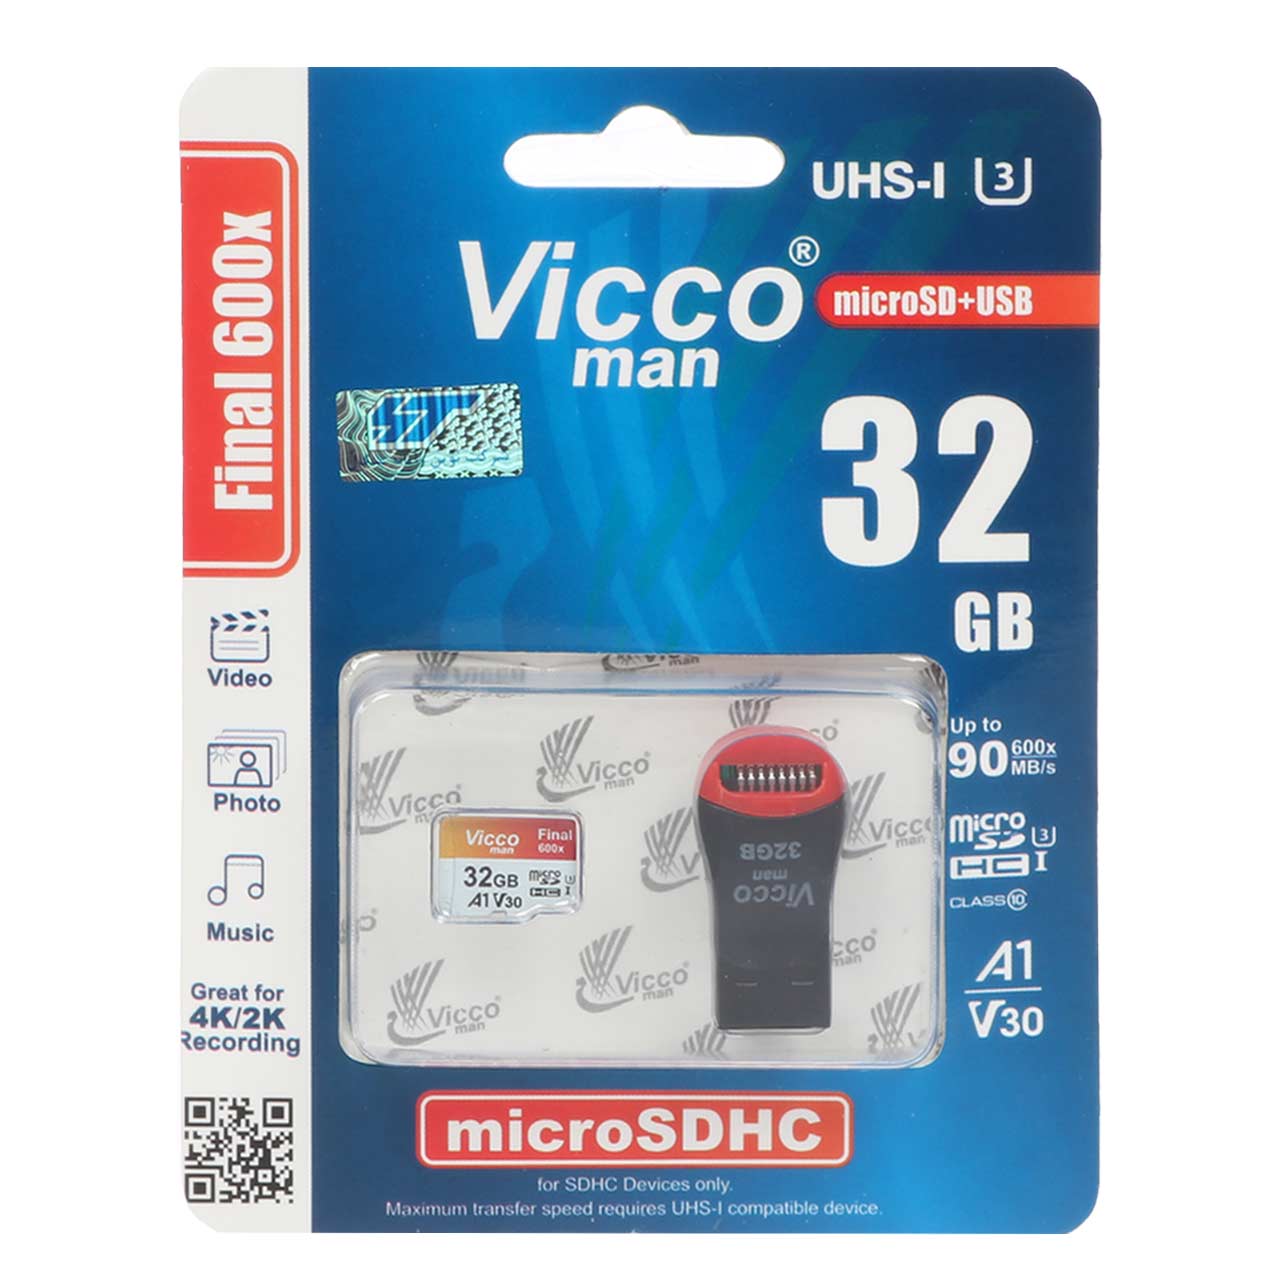 ViccoMan MicroSDHC&USB Final 600X V30 UHS-I U3 - 32GB